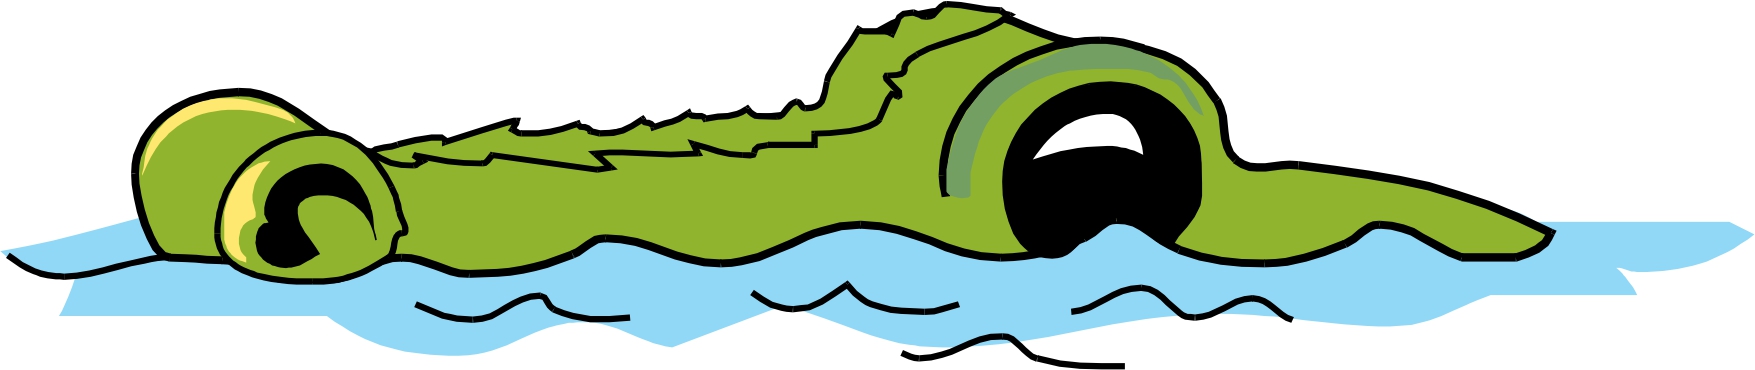 clipart alligator cartoon - photo #27